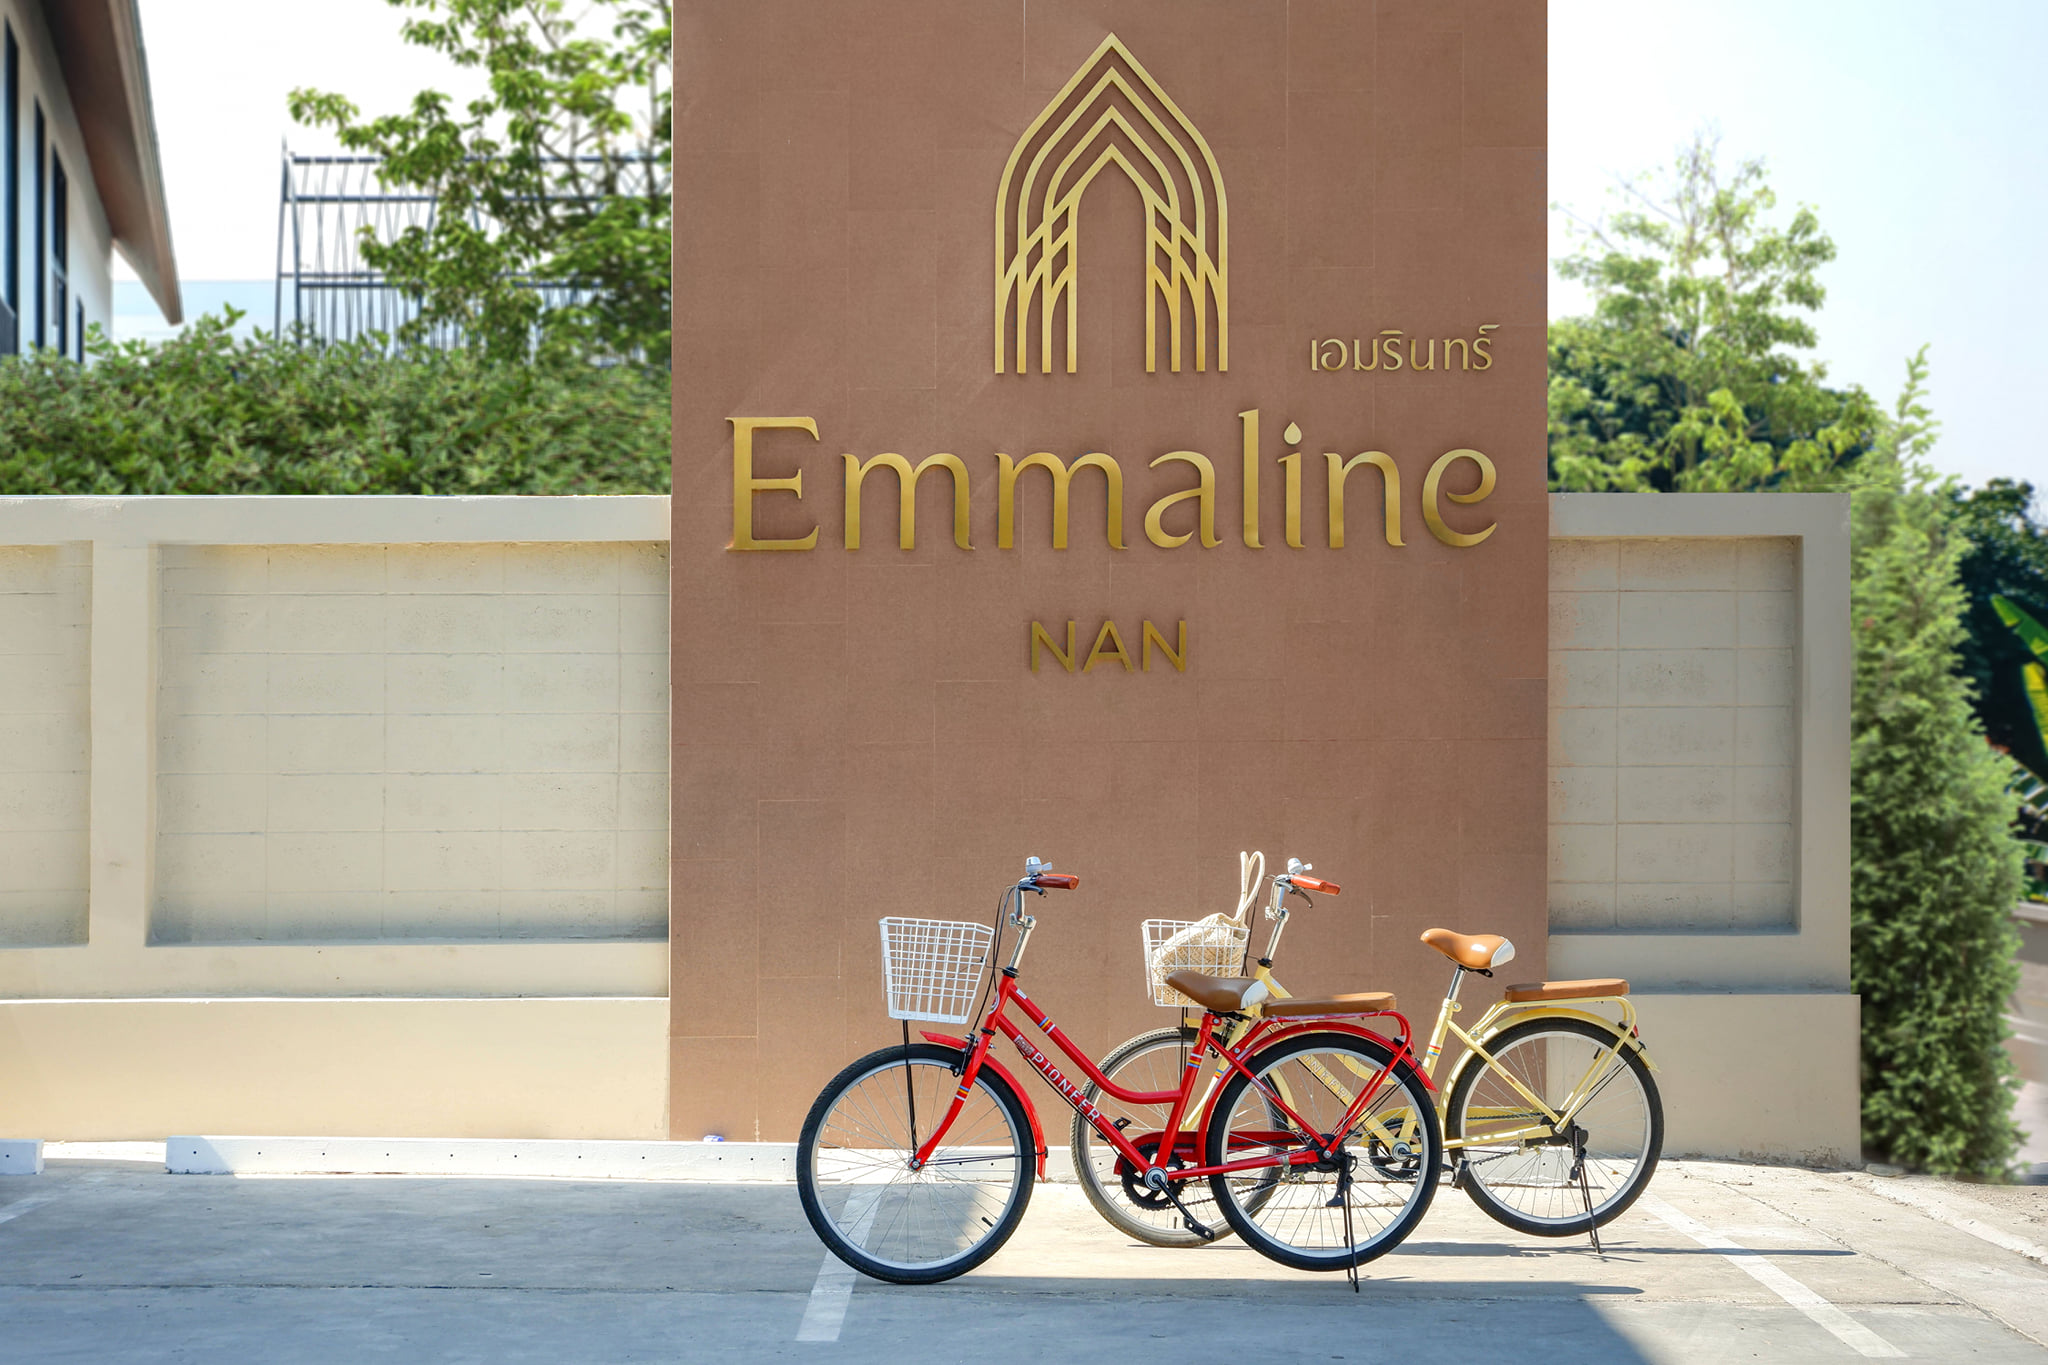 Emmaline hotel Nan